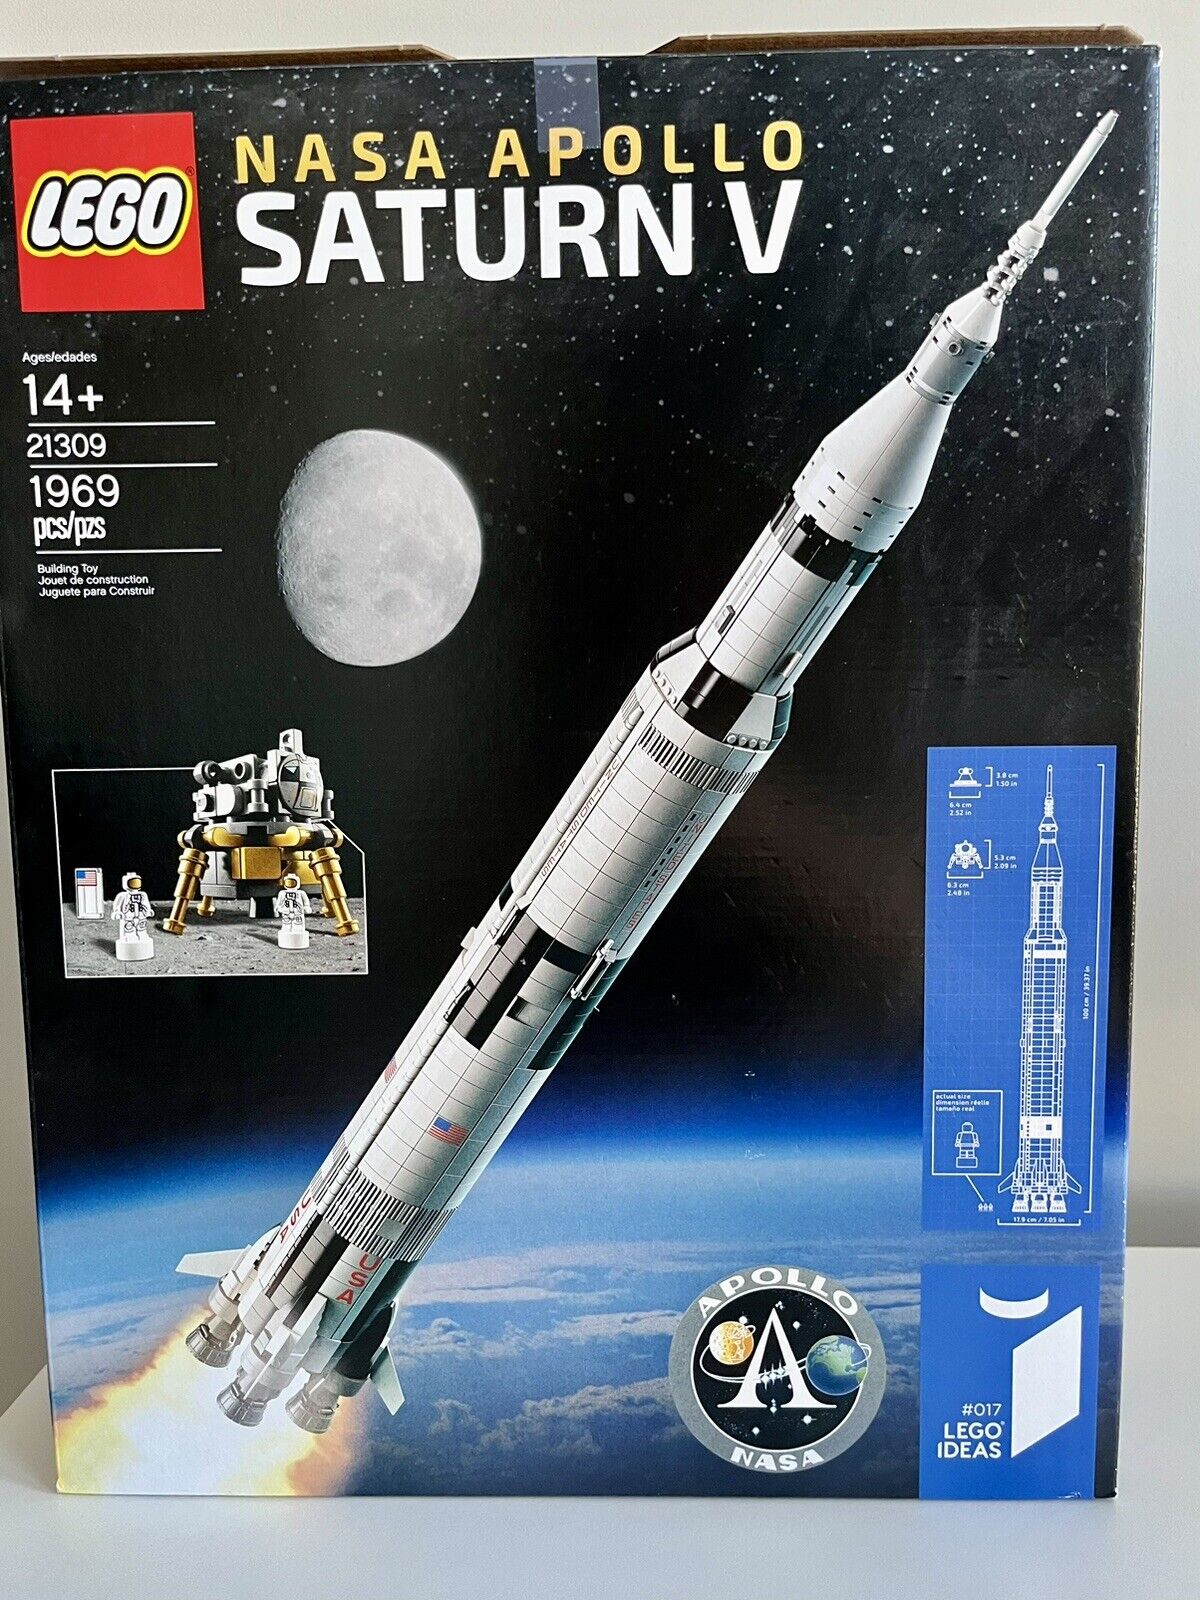 LEGO Ideas: NASA Apollo Saturn V (21309) Complete With Box And Manual